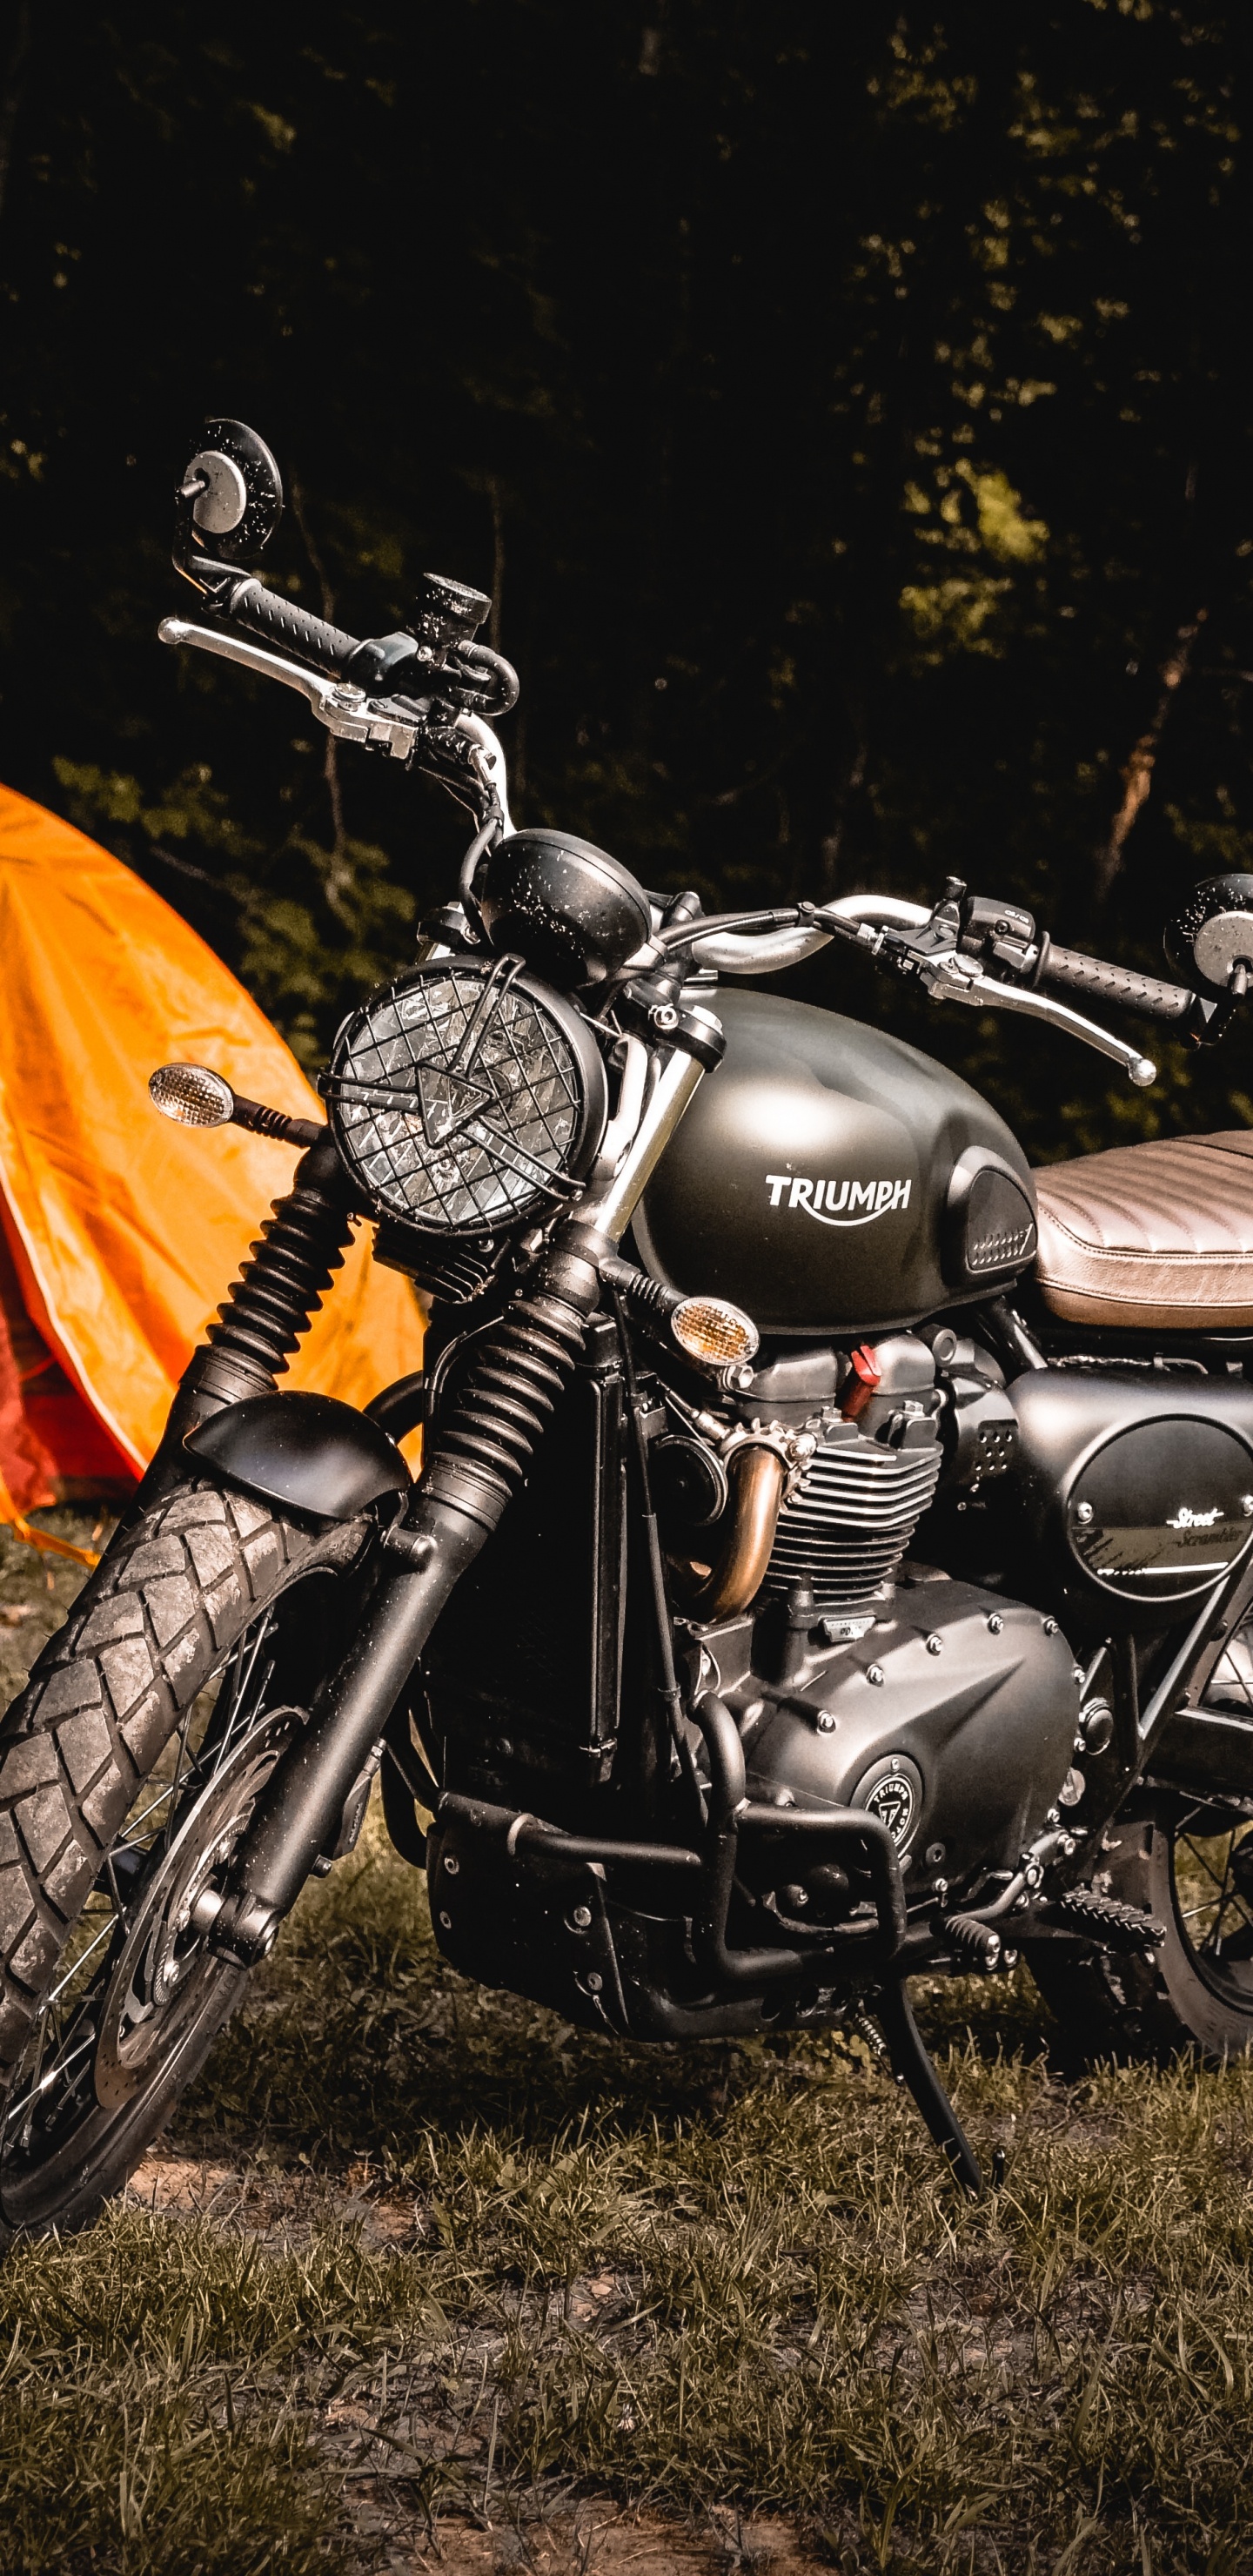 Motocicleta Cruiser Negra y Plateada Cerca de la Carpa Naranja. Wallpaper in 1440x2960 Resolution